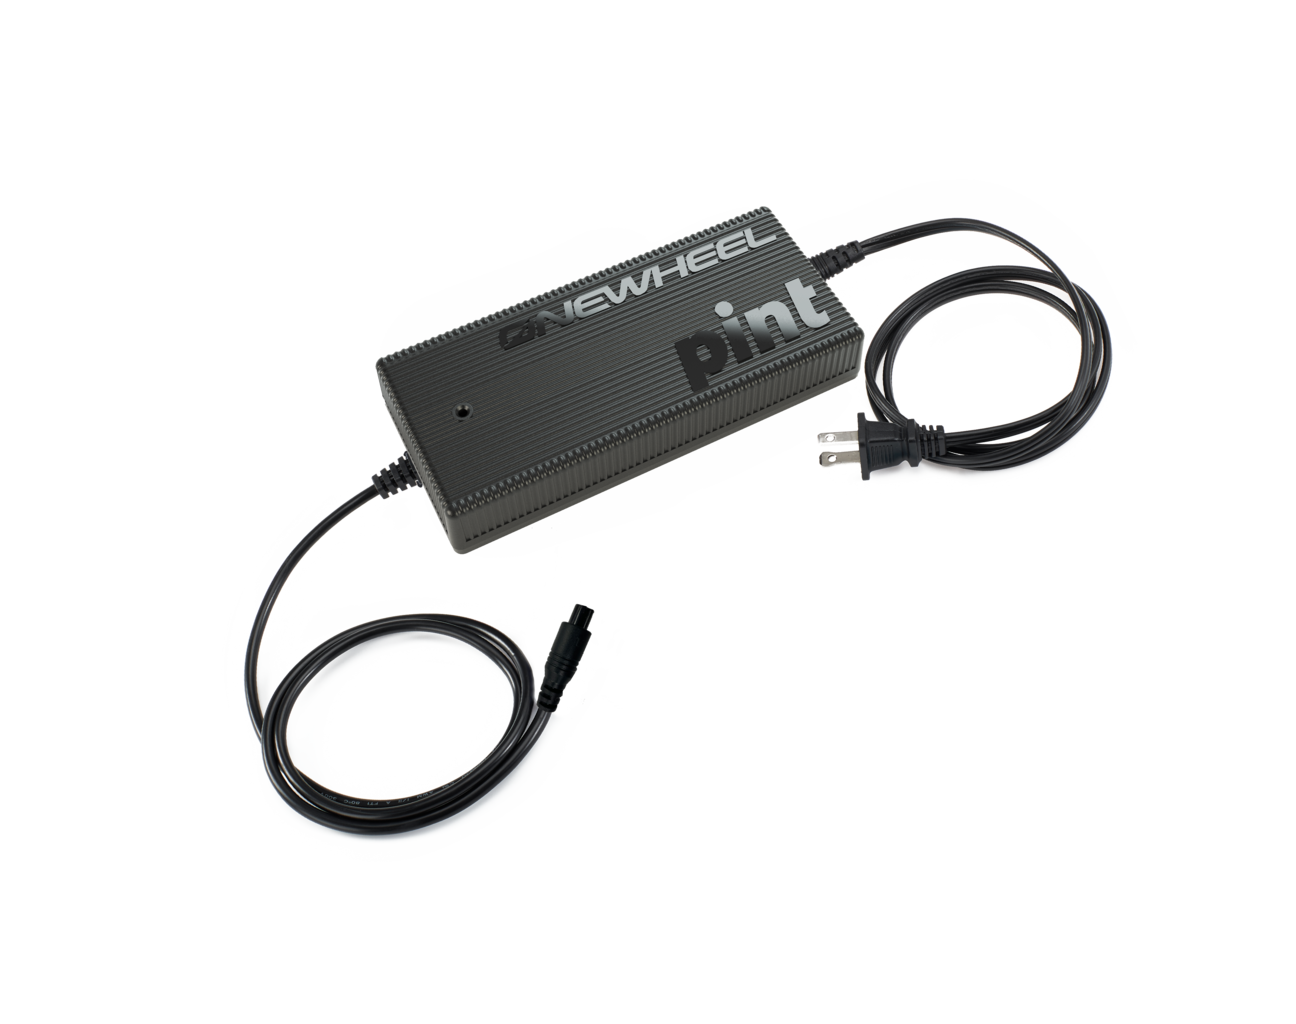 Onewheel Pint Ultracharger